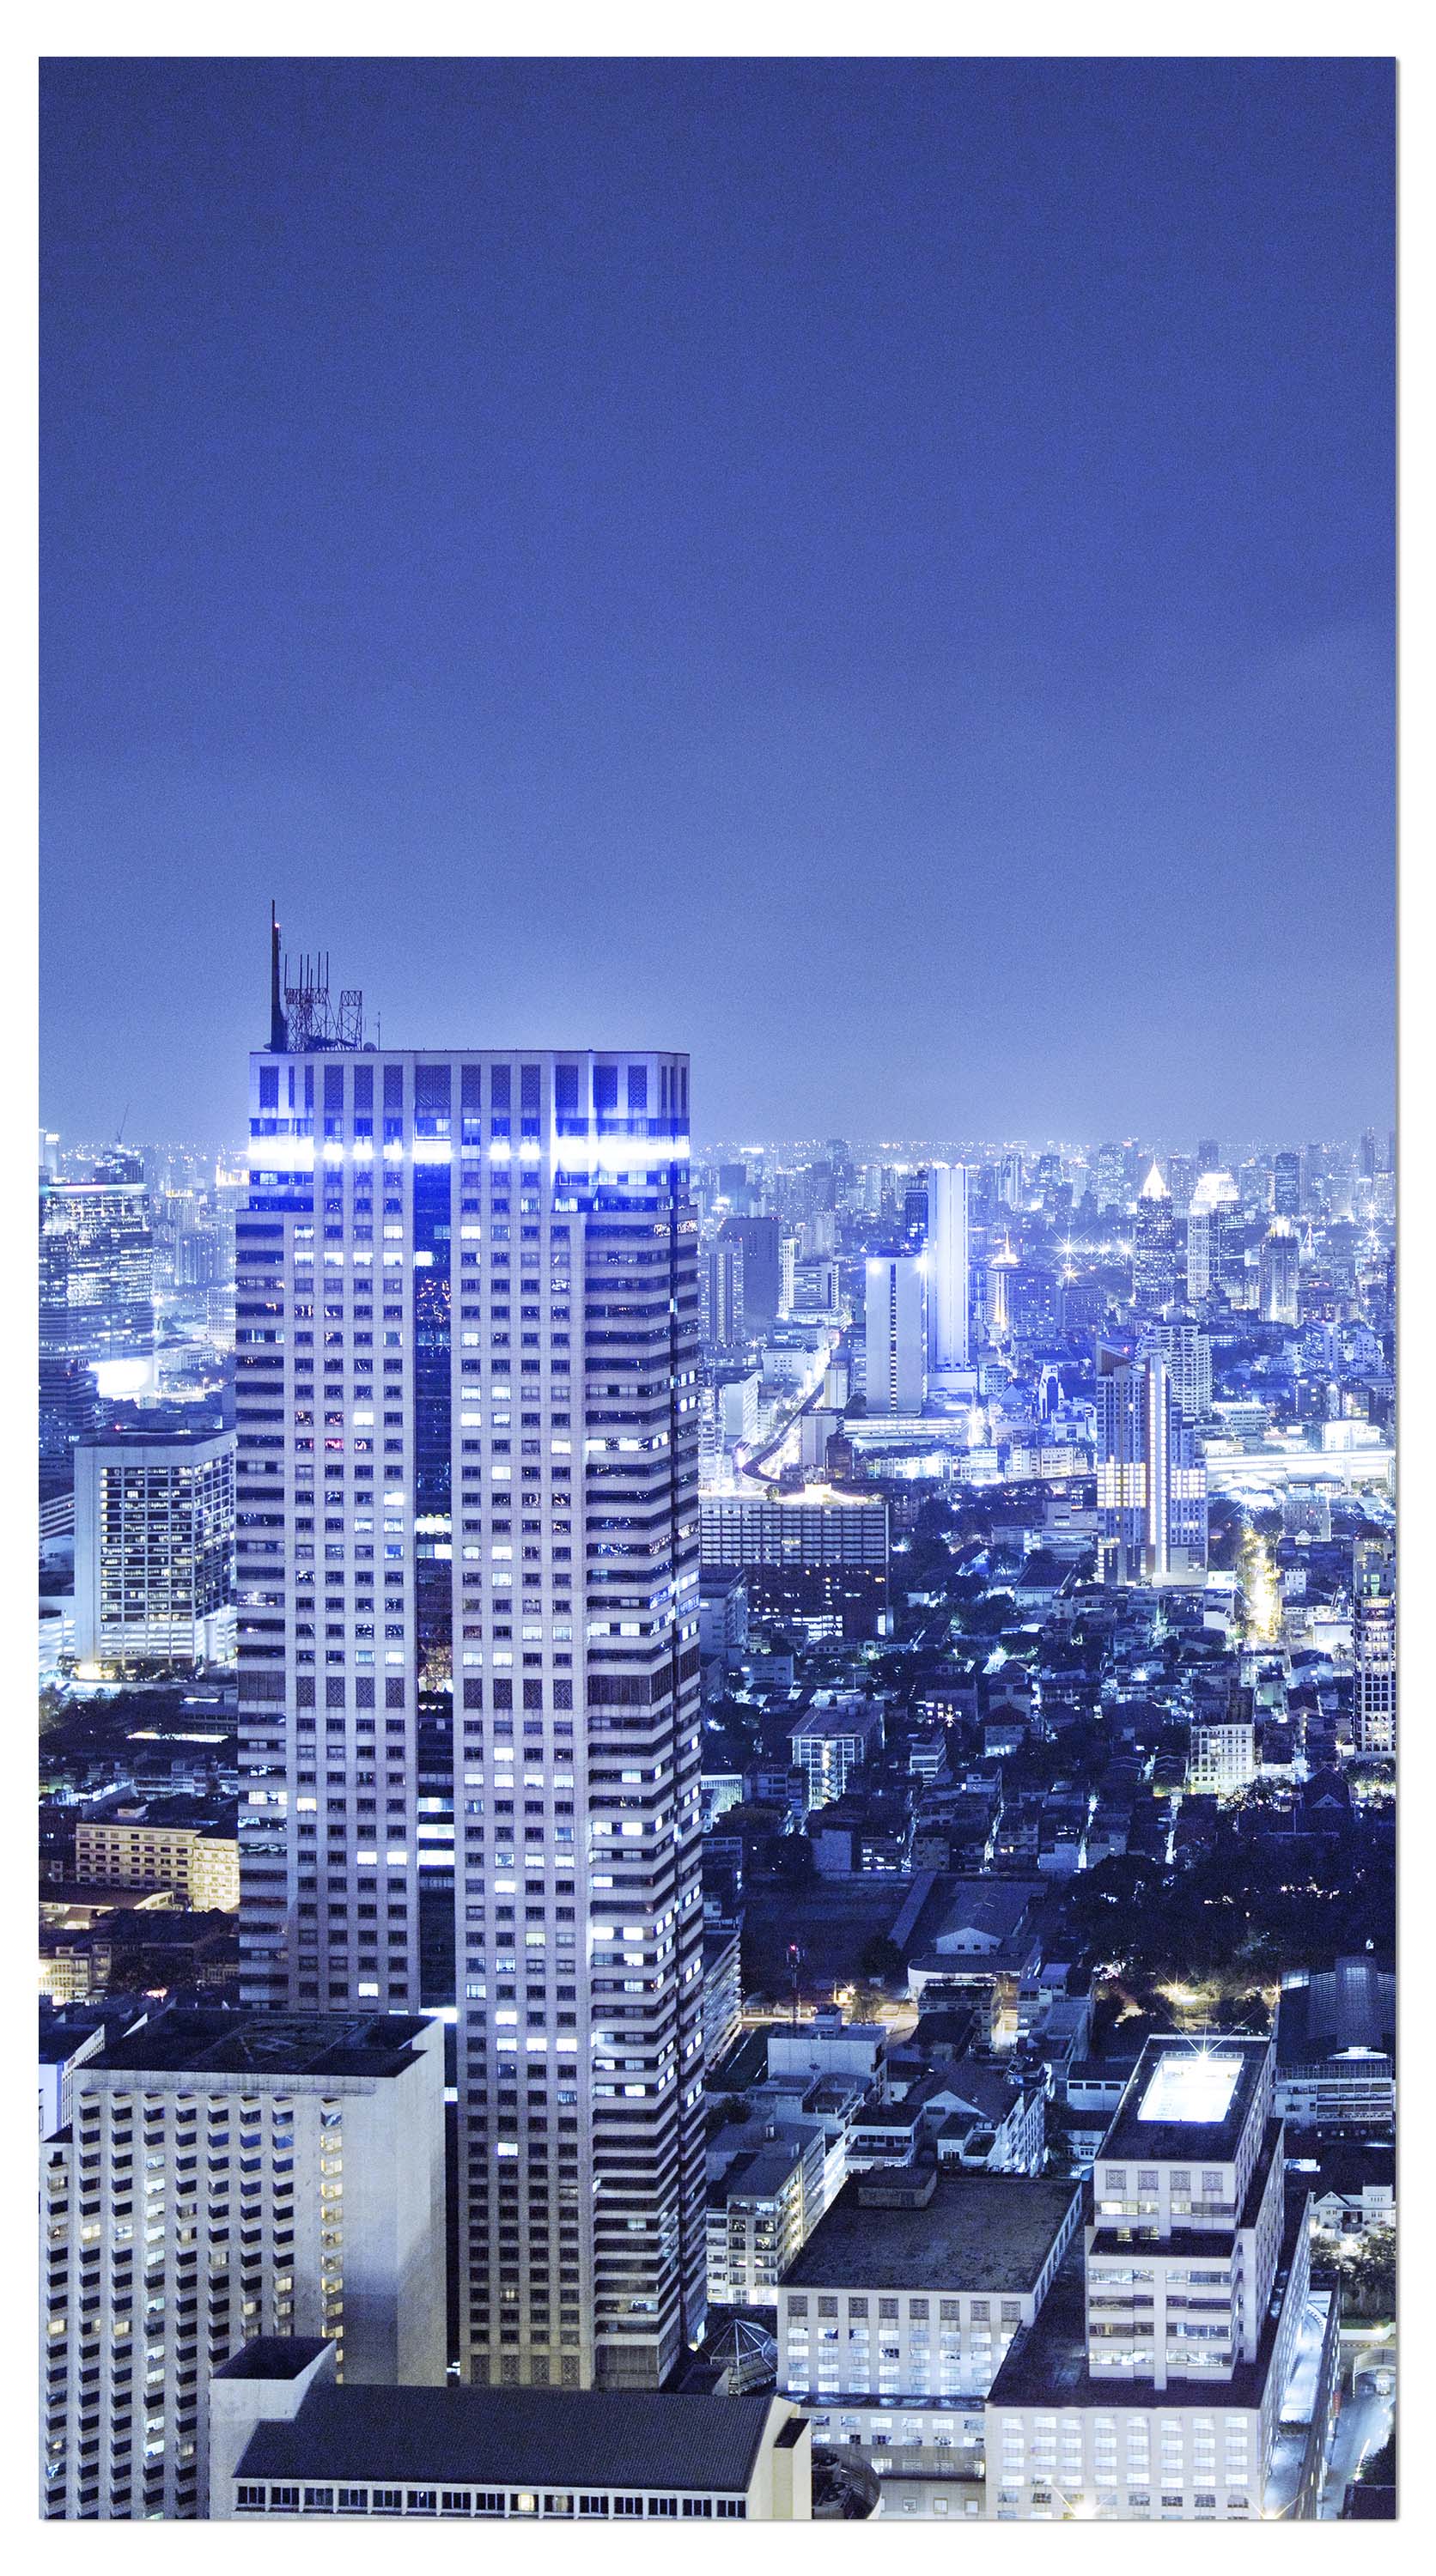 Garderobe Bangkok bei Nacht M0331 entdecken - Bild 4